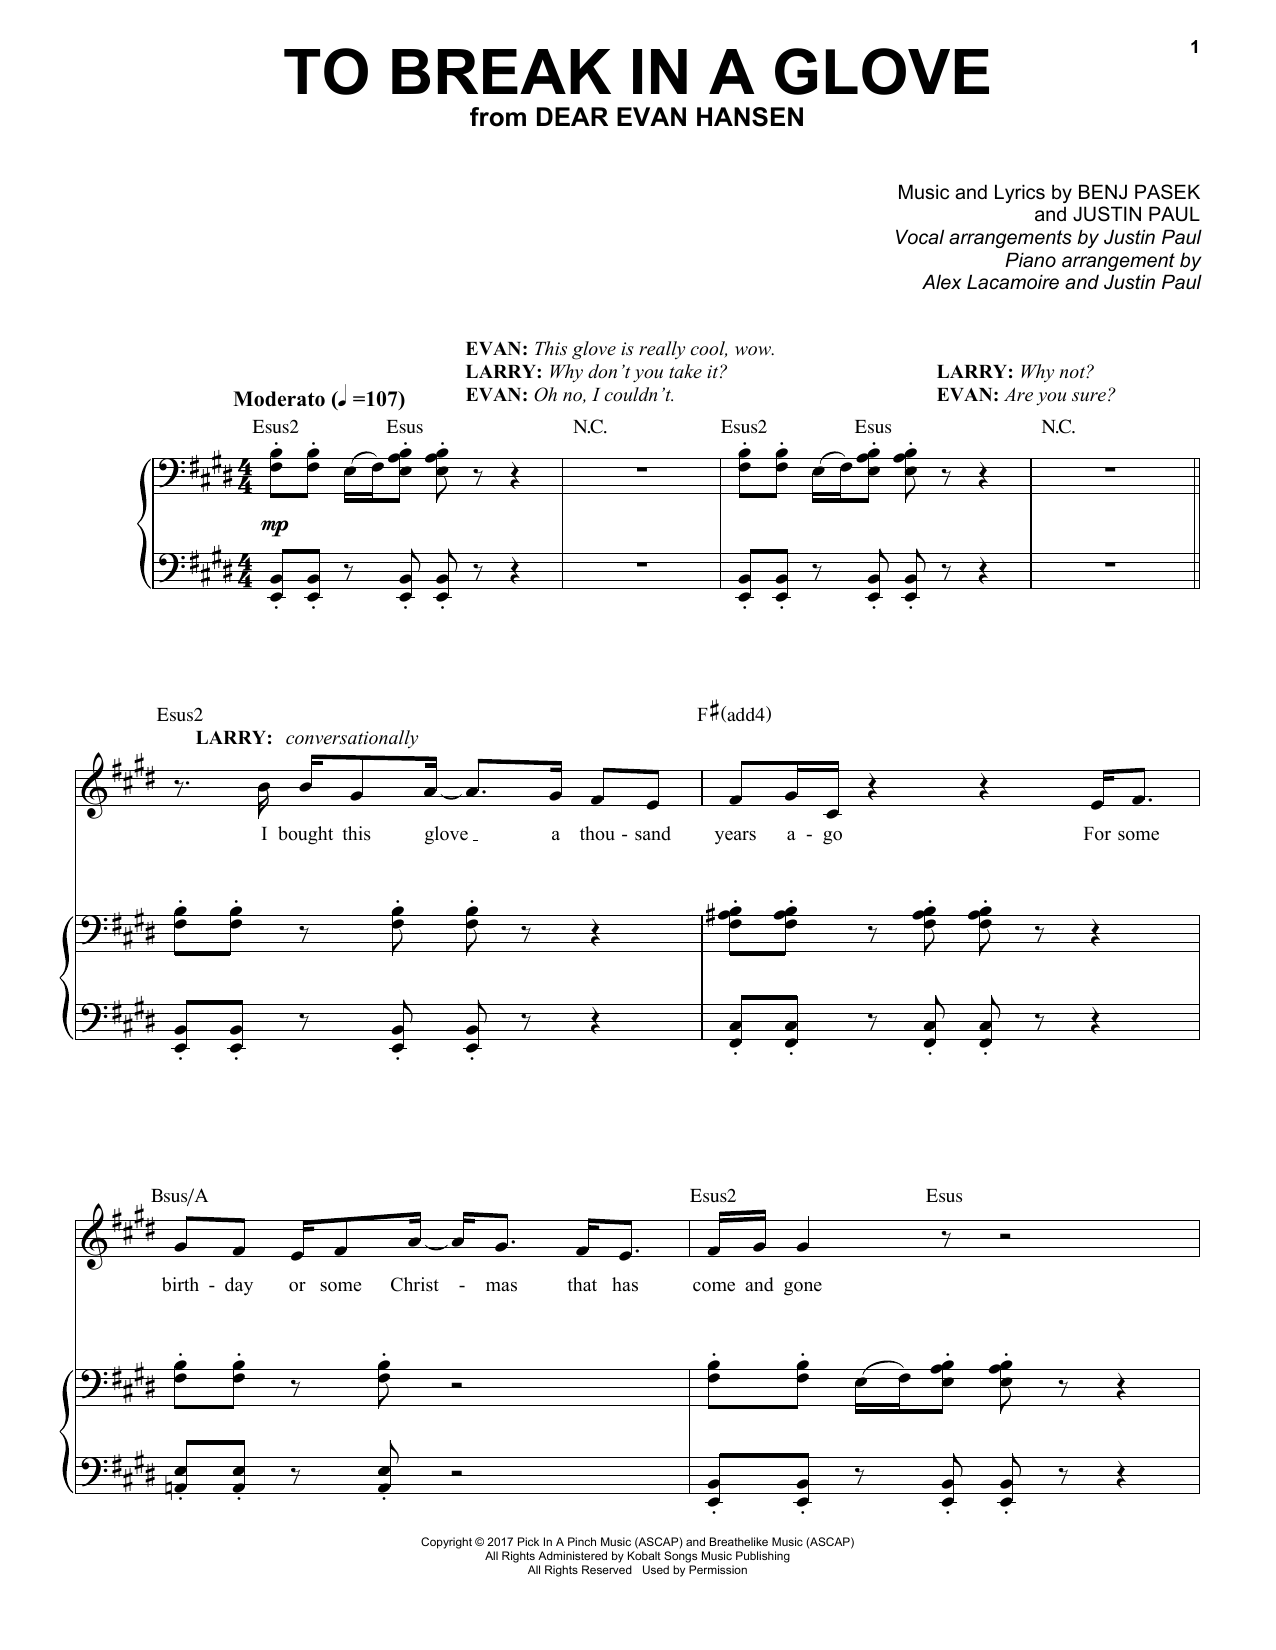 Download Pasek & Paul To Break In A Glove (from Dear Evan Hansen) Sheet Music and learn how to play Ukulele PDF digital score in minutes